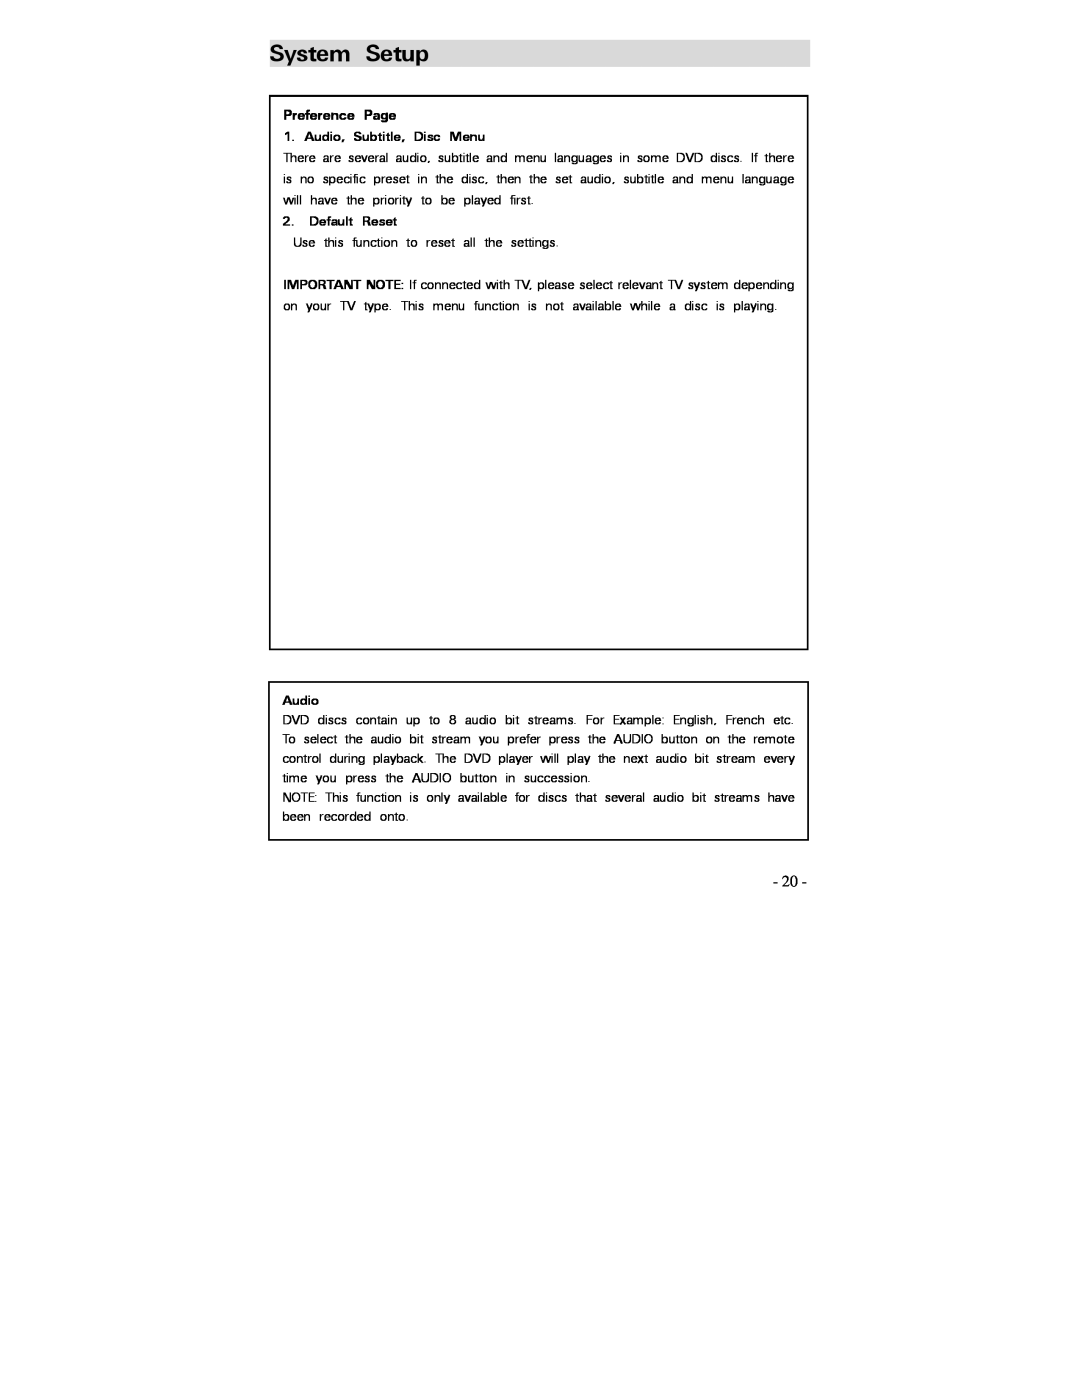 Polaroid PDV-0750 operation manual Preference Page 1. Audio, Subtitle, Disc Menu, Default Reset, System Setup 